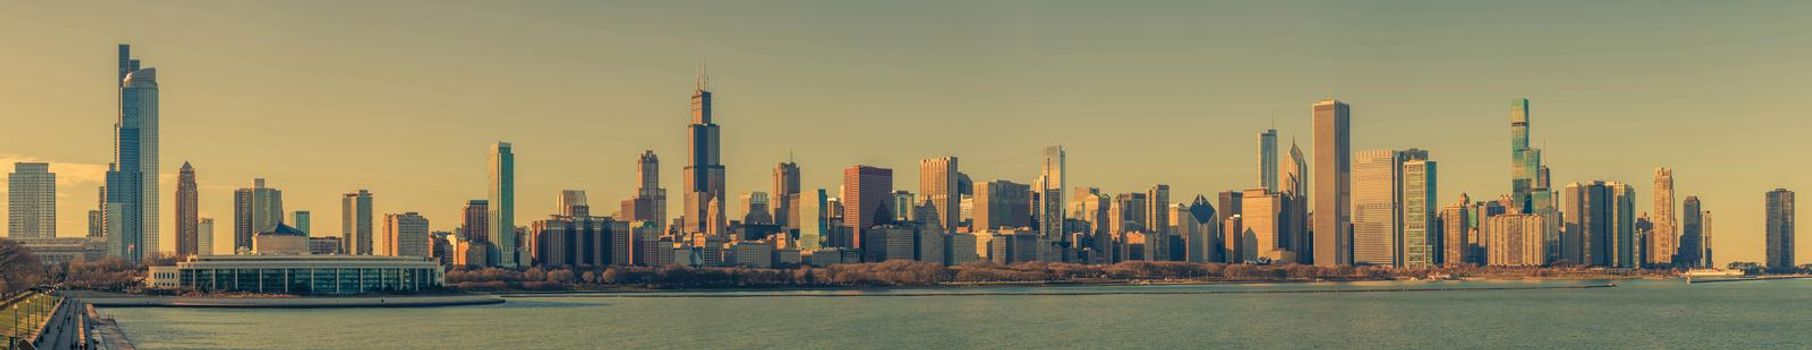 Panoramic Skyline of Chicago Downtown Illinois